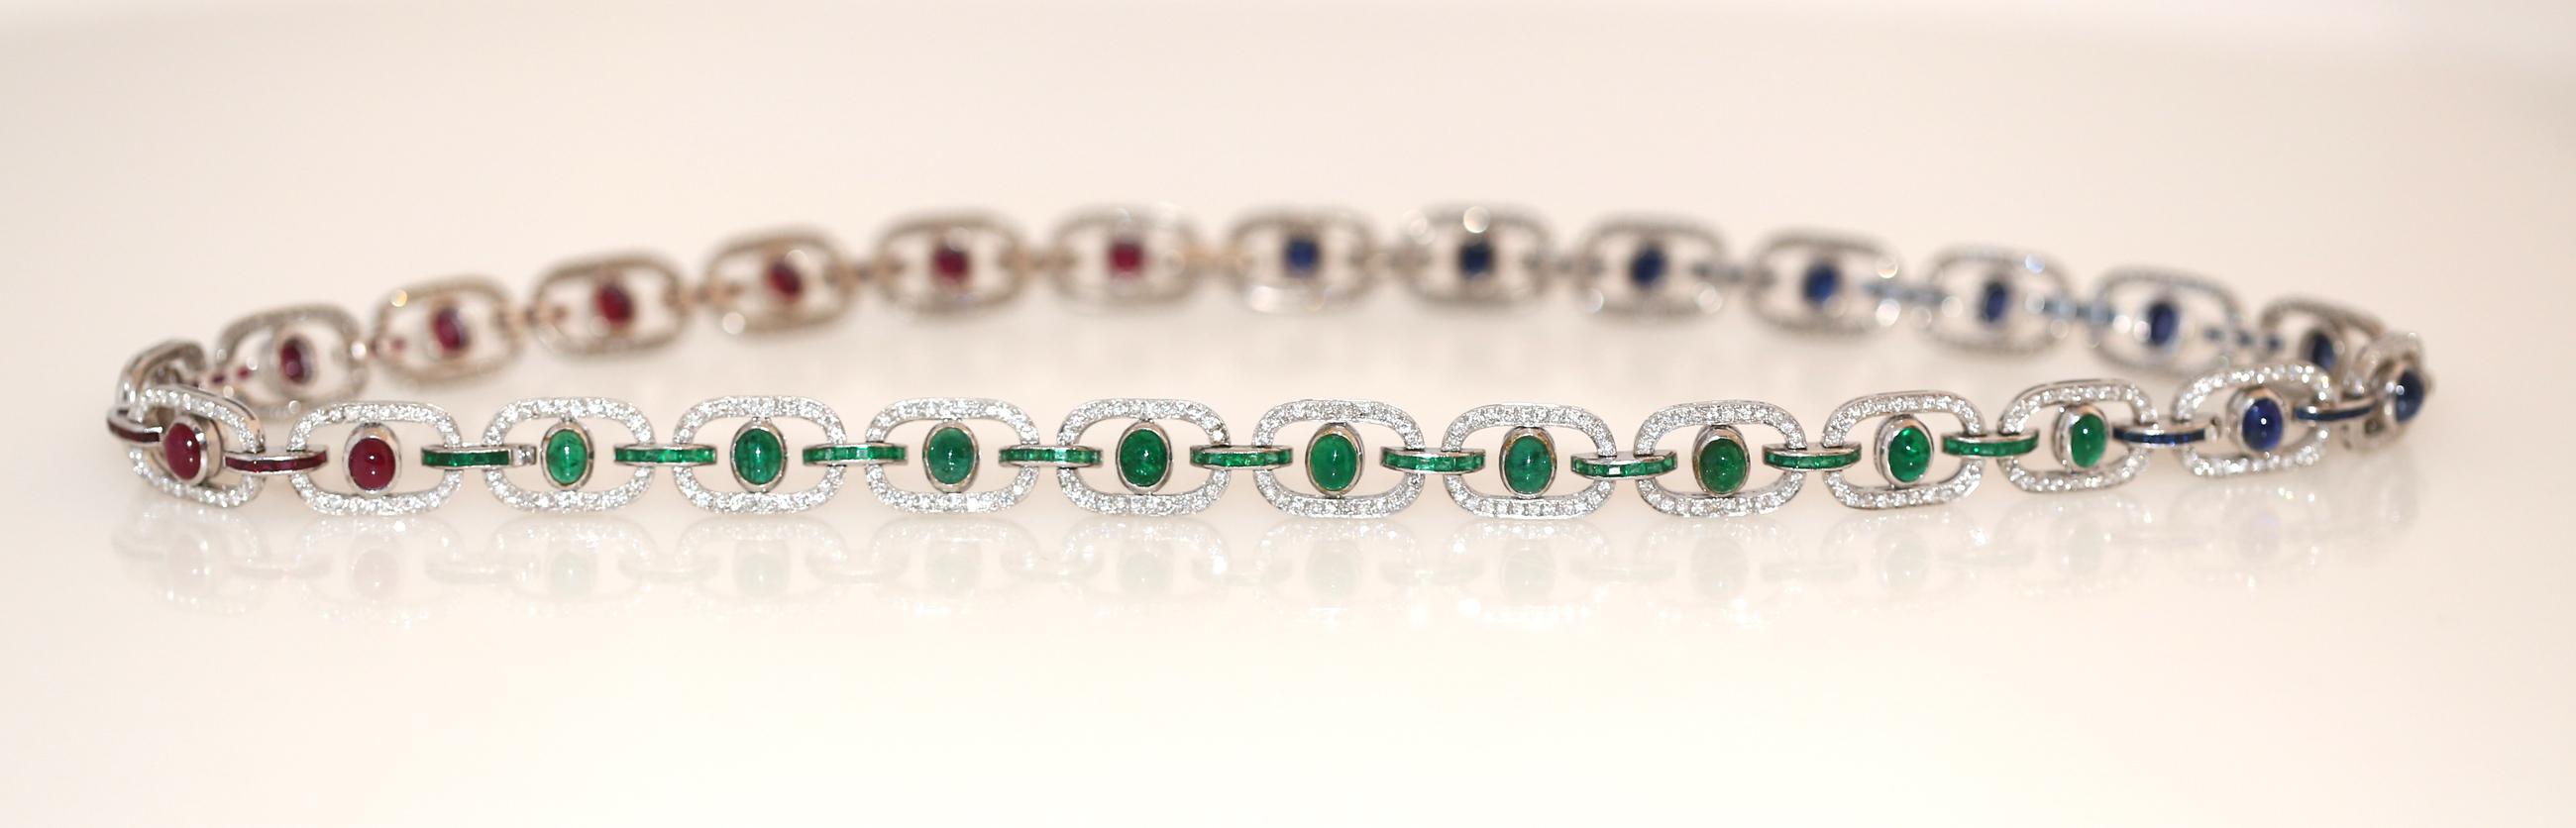 3 Bracelets Set Sapphires Rubies Diamonds Emeralds Necklace Сhoker White Gold In Good Condition For Sale In Herzelia, Tel Aviv